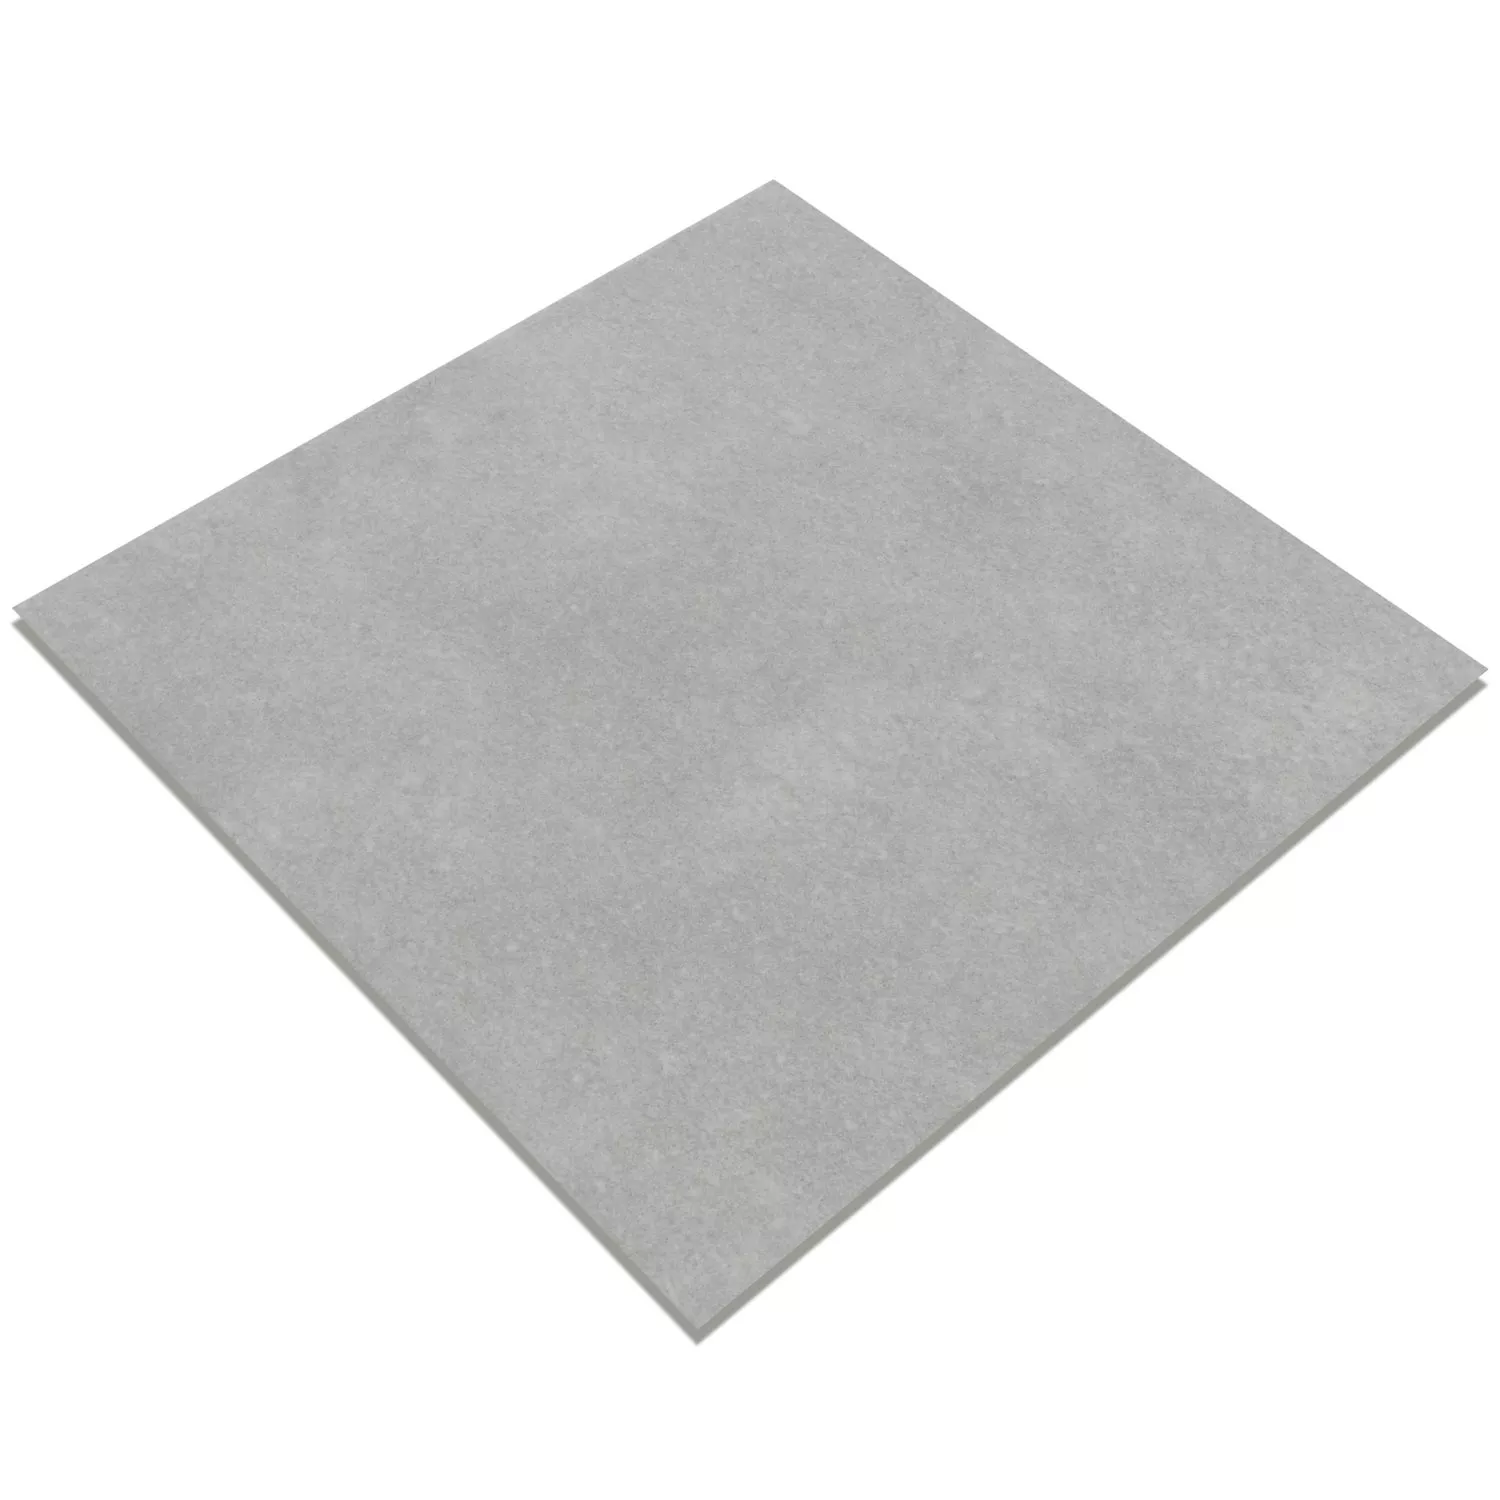 Sample Cement Tiles Optic Gotik Basic Tile Grey 22,3x22,3cm